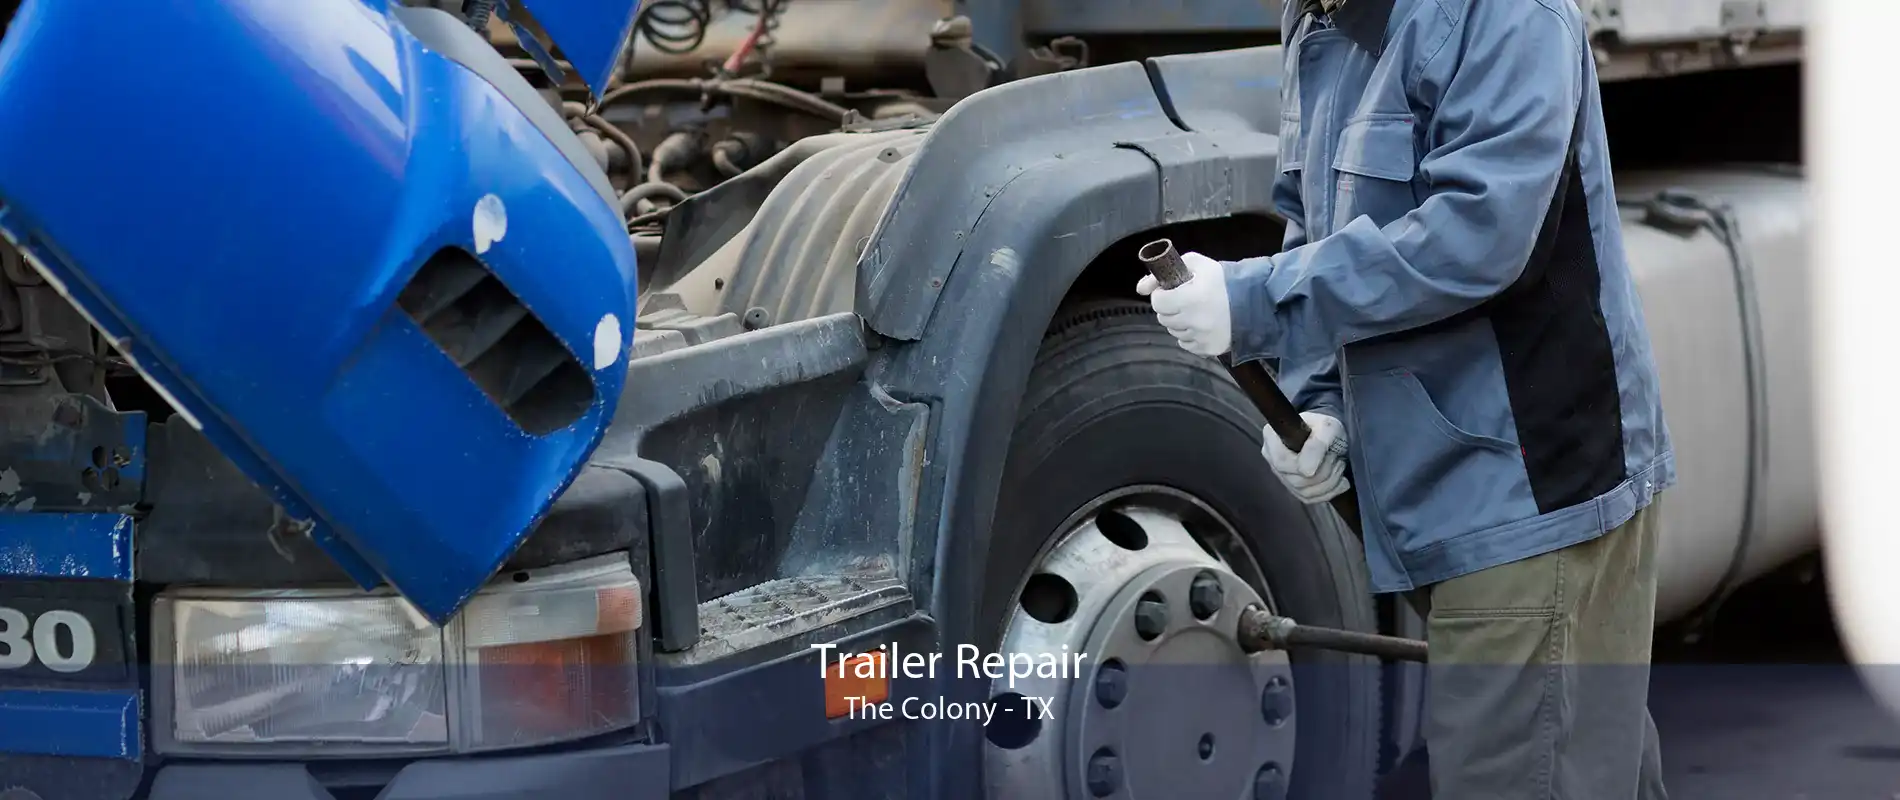 Trailer Repair The Colony - TX